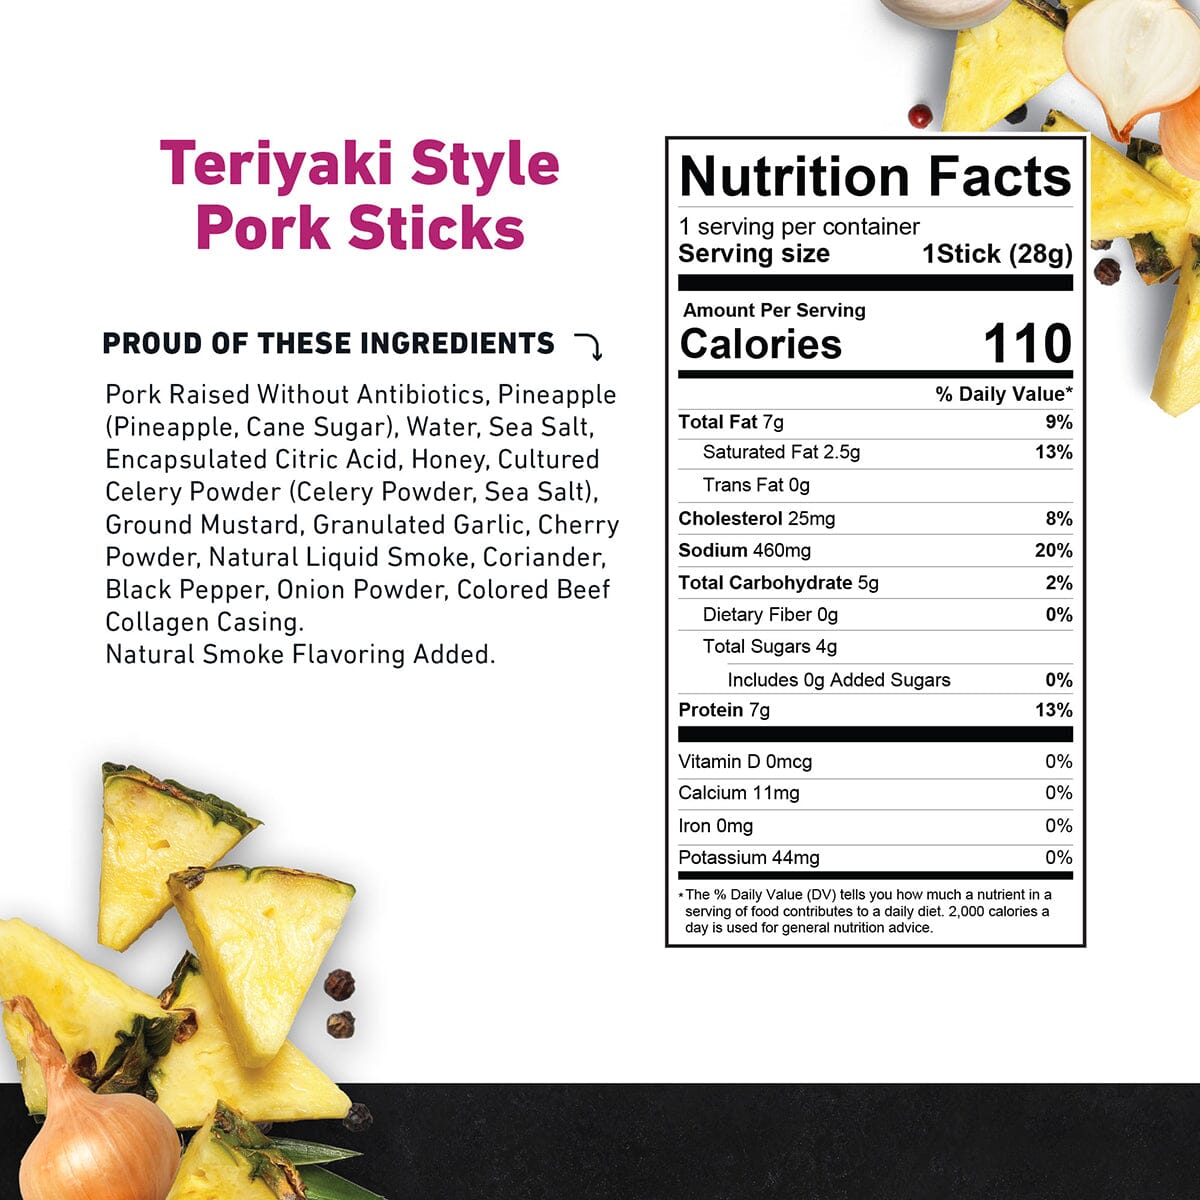  Teriyaki Style Pork Stick by Country Archer, Teriyaki Style Pork Stick, All Na, teriyaki-style-pork-stick, , 1oz Stick